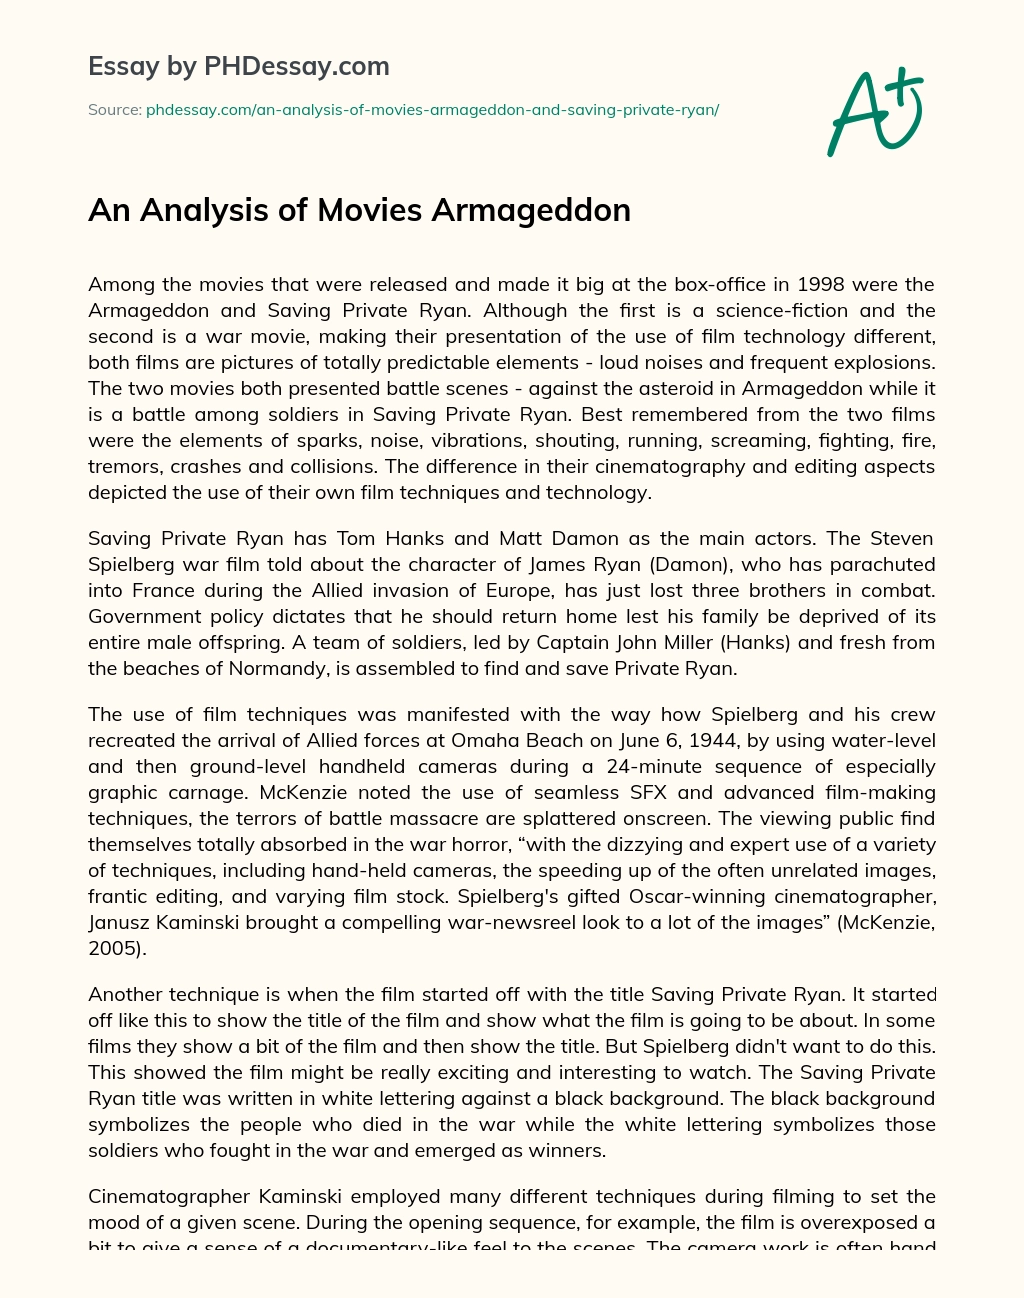 An Analysis of Movies Armageddon essay